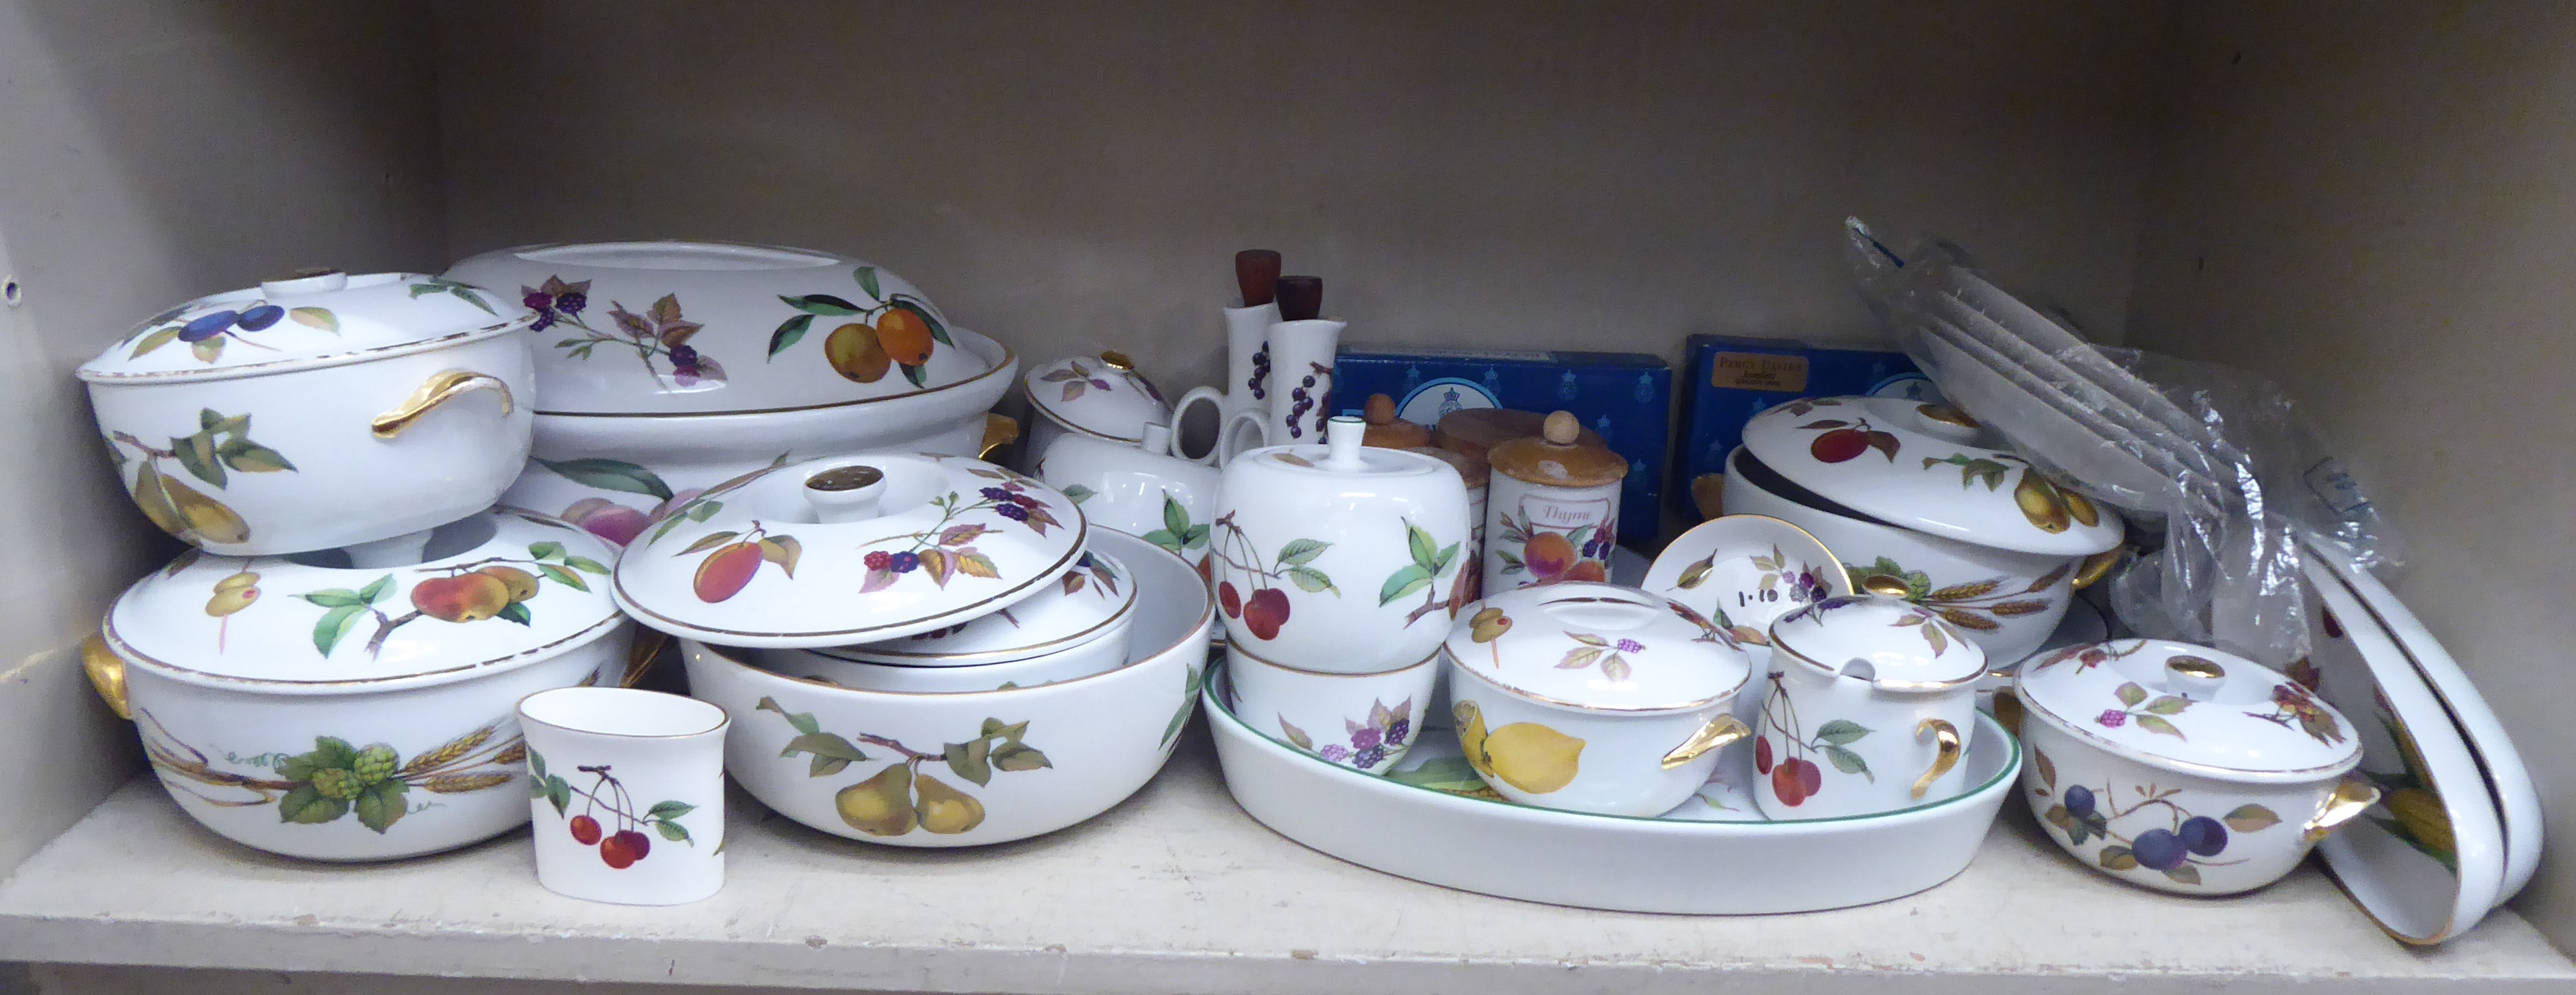 Evesham Worcester porcelain tea and dinnerware